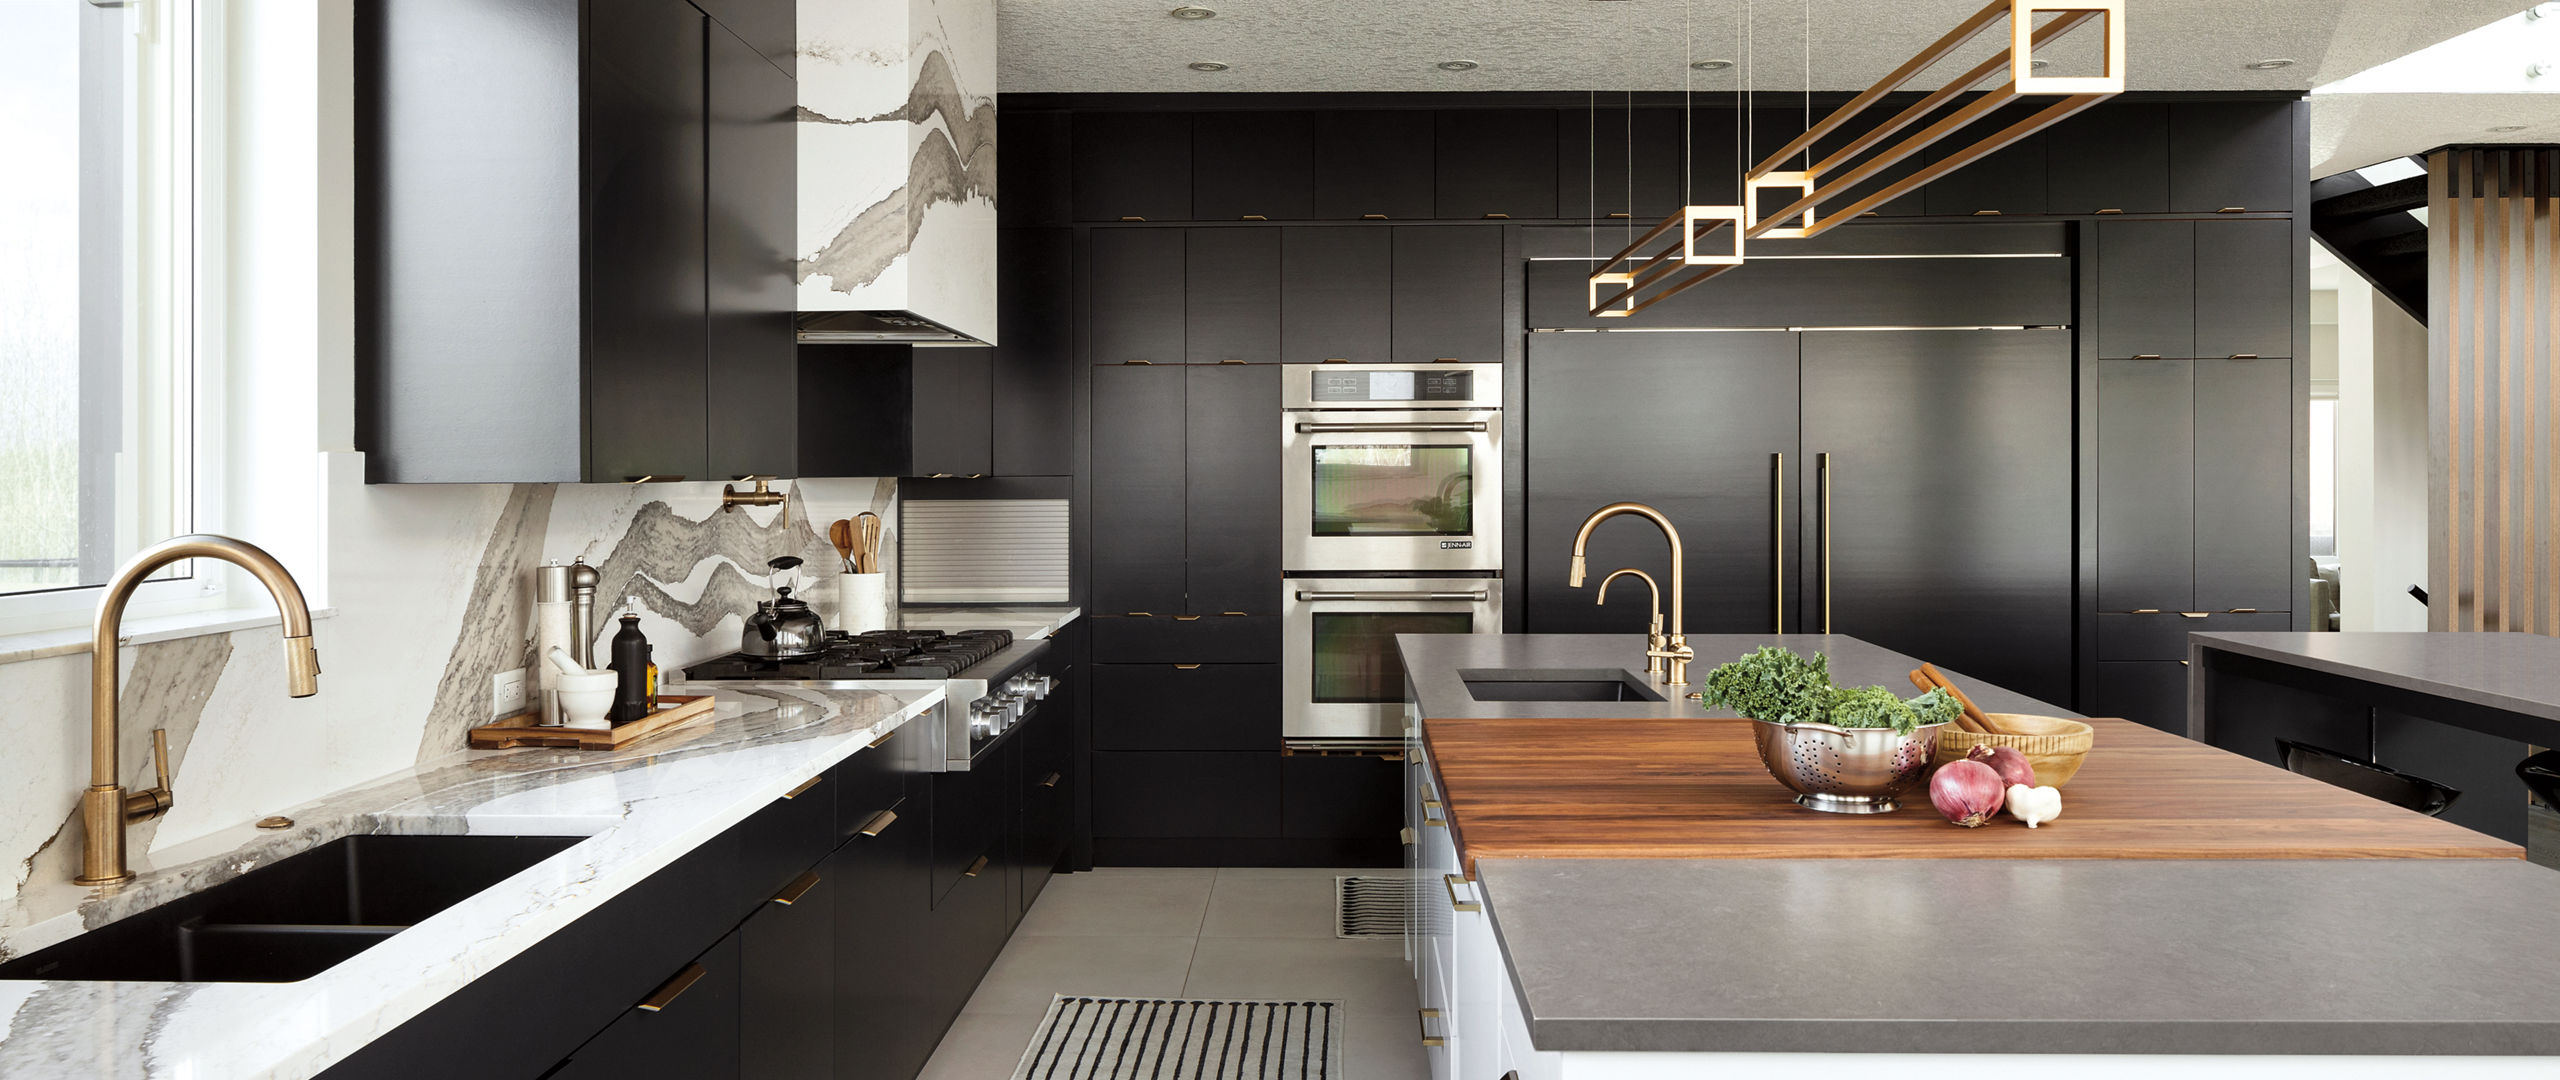 Kitchen with Skara brae and Carrick quartz countertops, dark wood cabinets and brass hardware